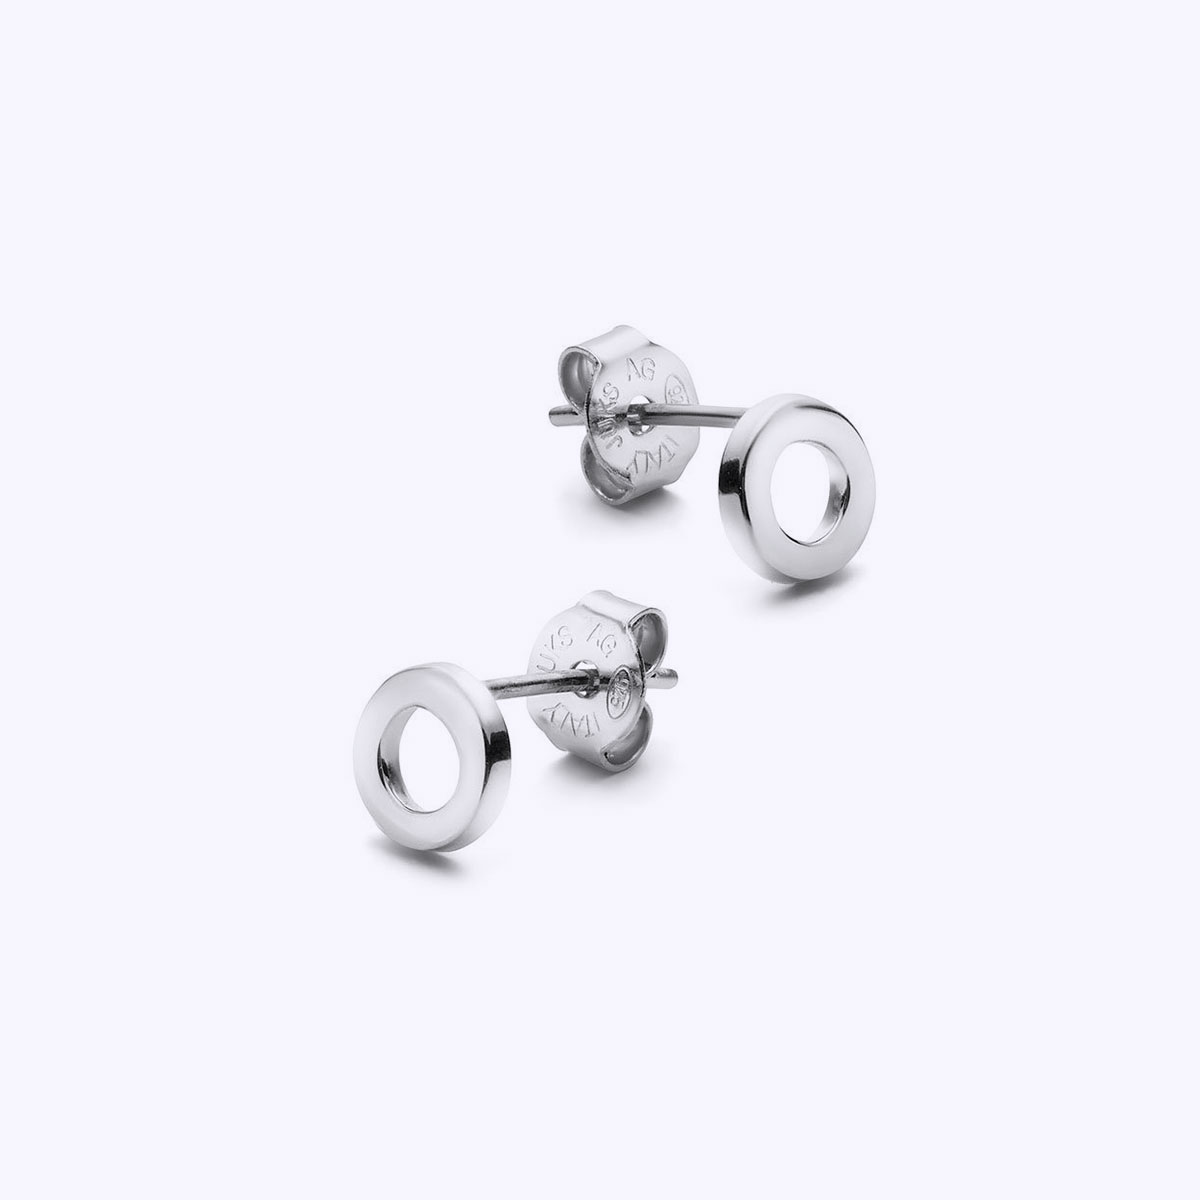 silver circle earrings